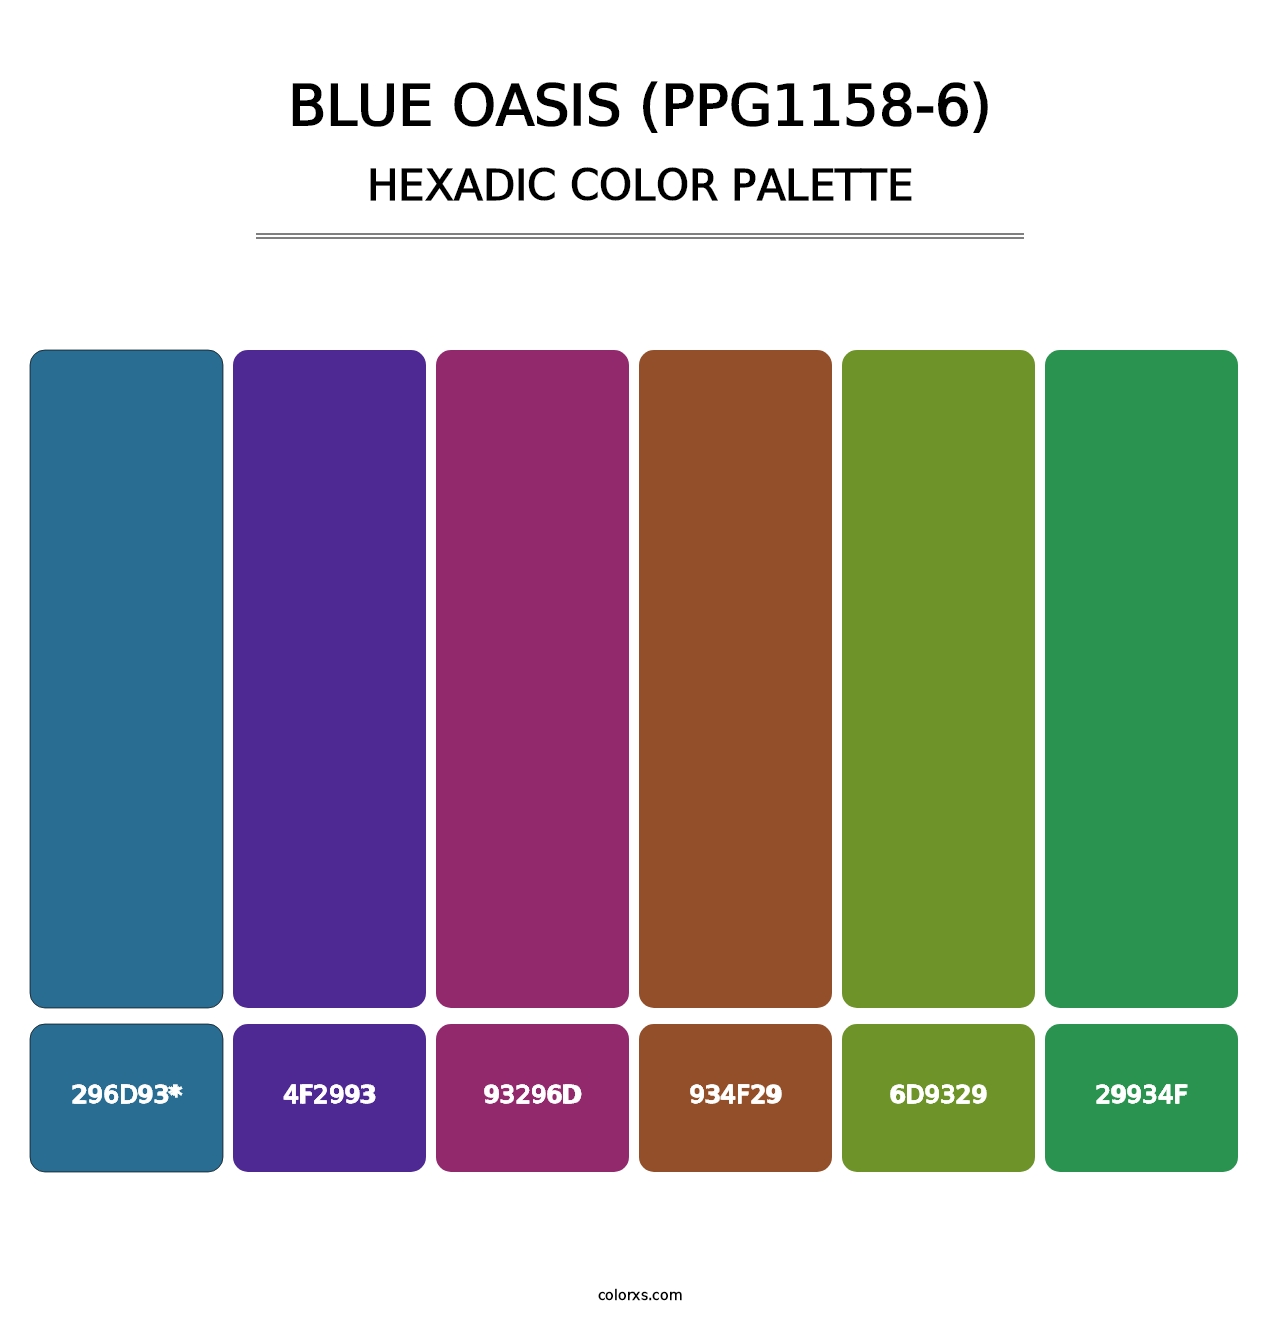 Blue Oasis (PPG1158-6) - Hexadic Color Palette